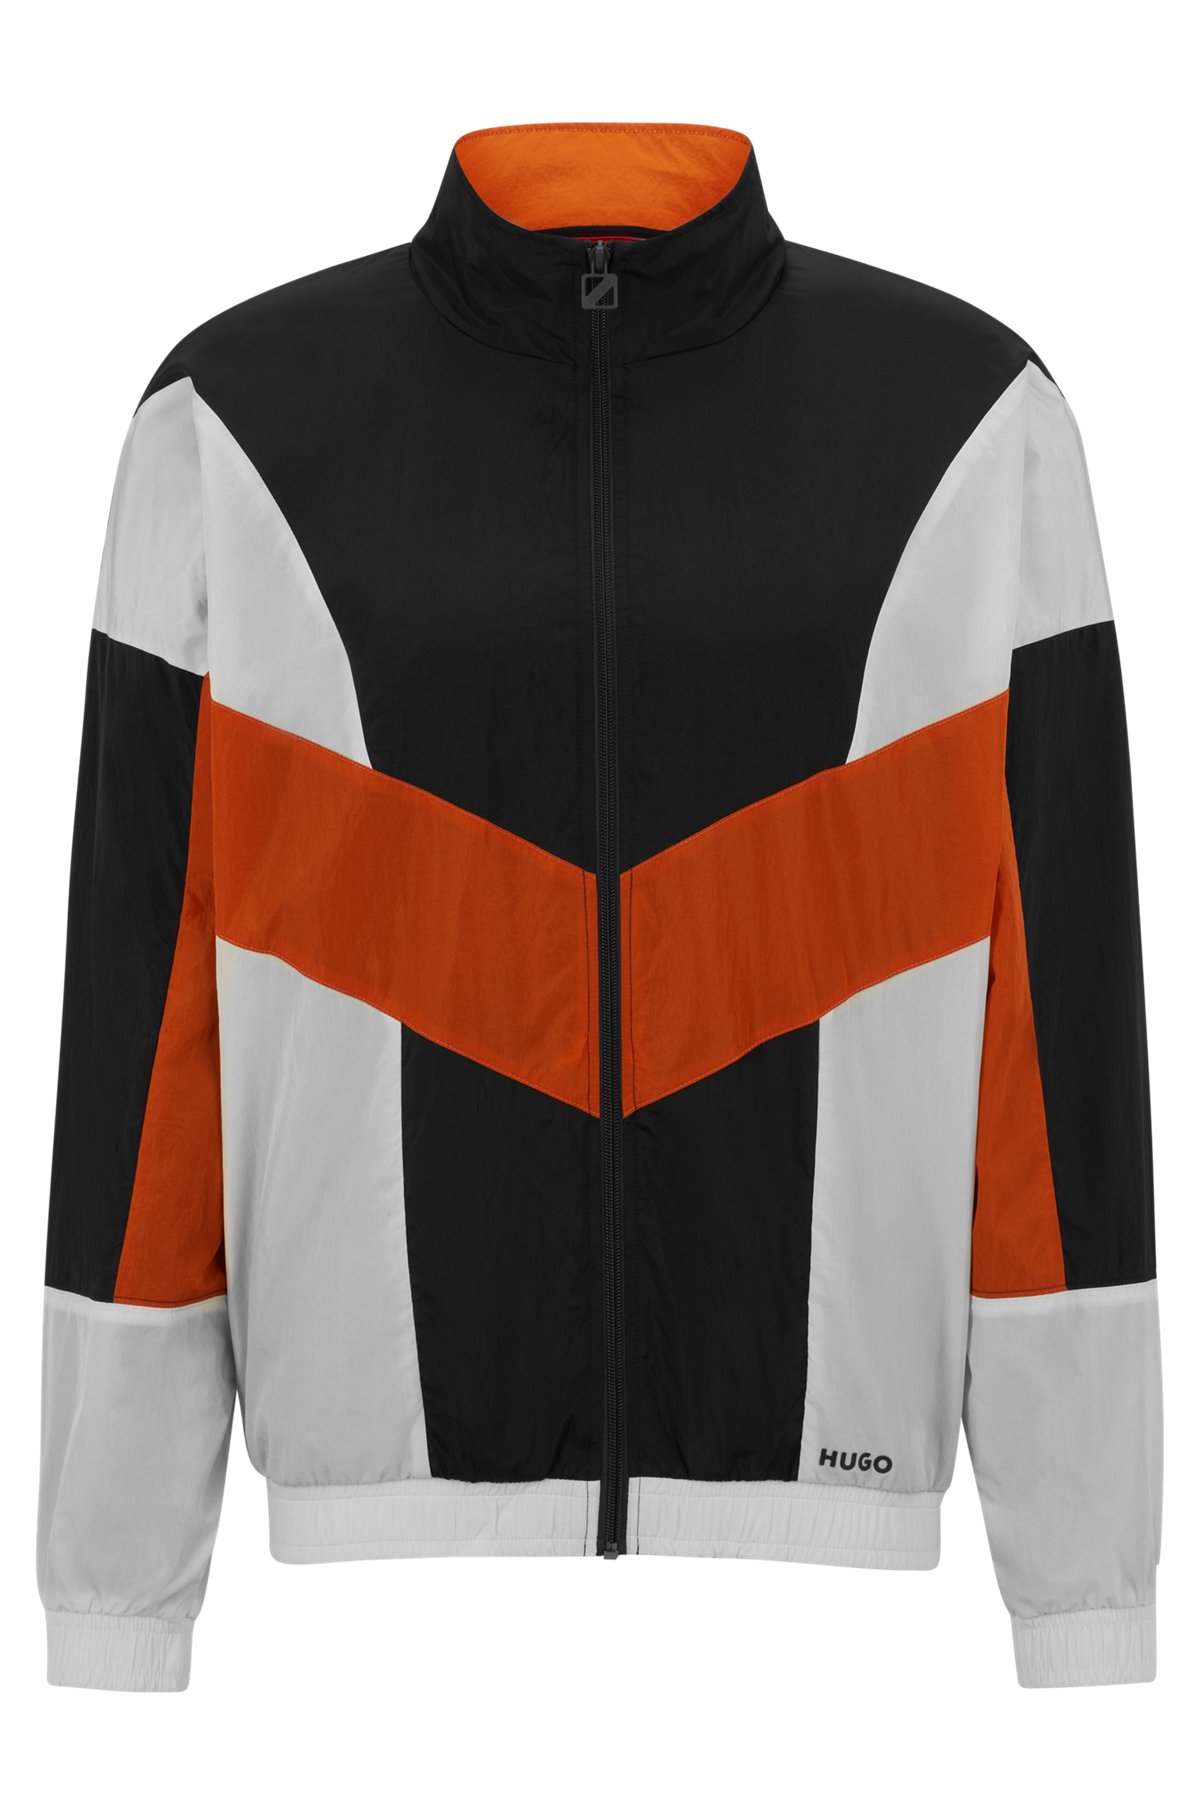 HUGO - Colour-blocked zip-up jacket with logo print